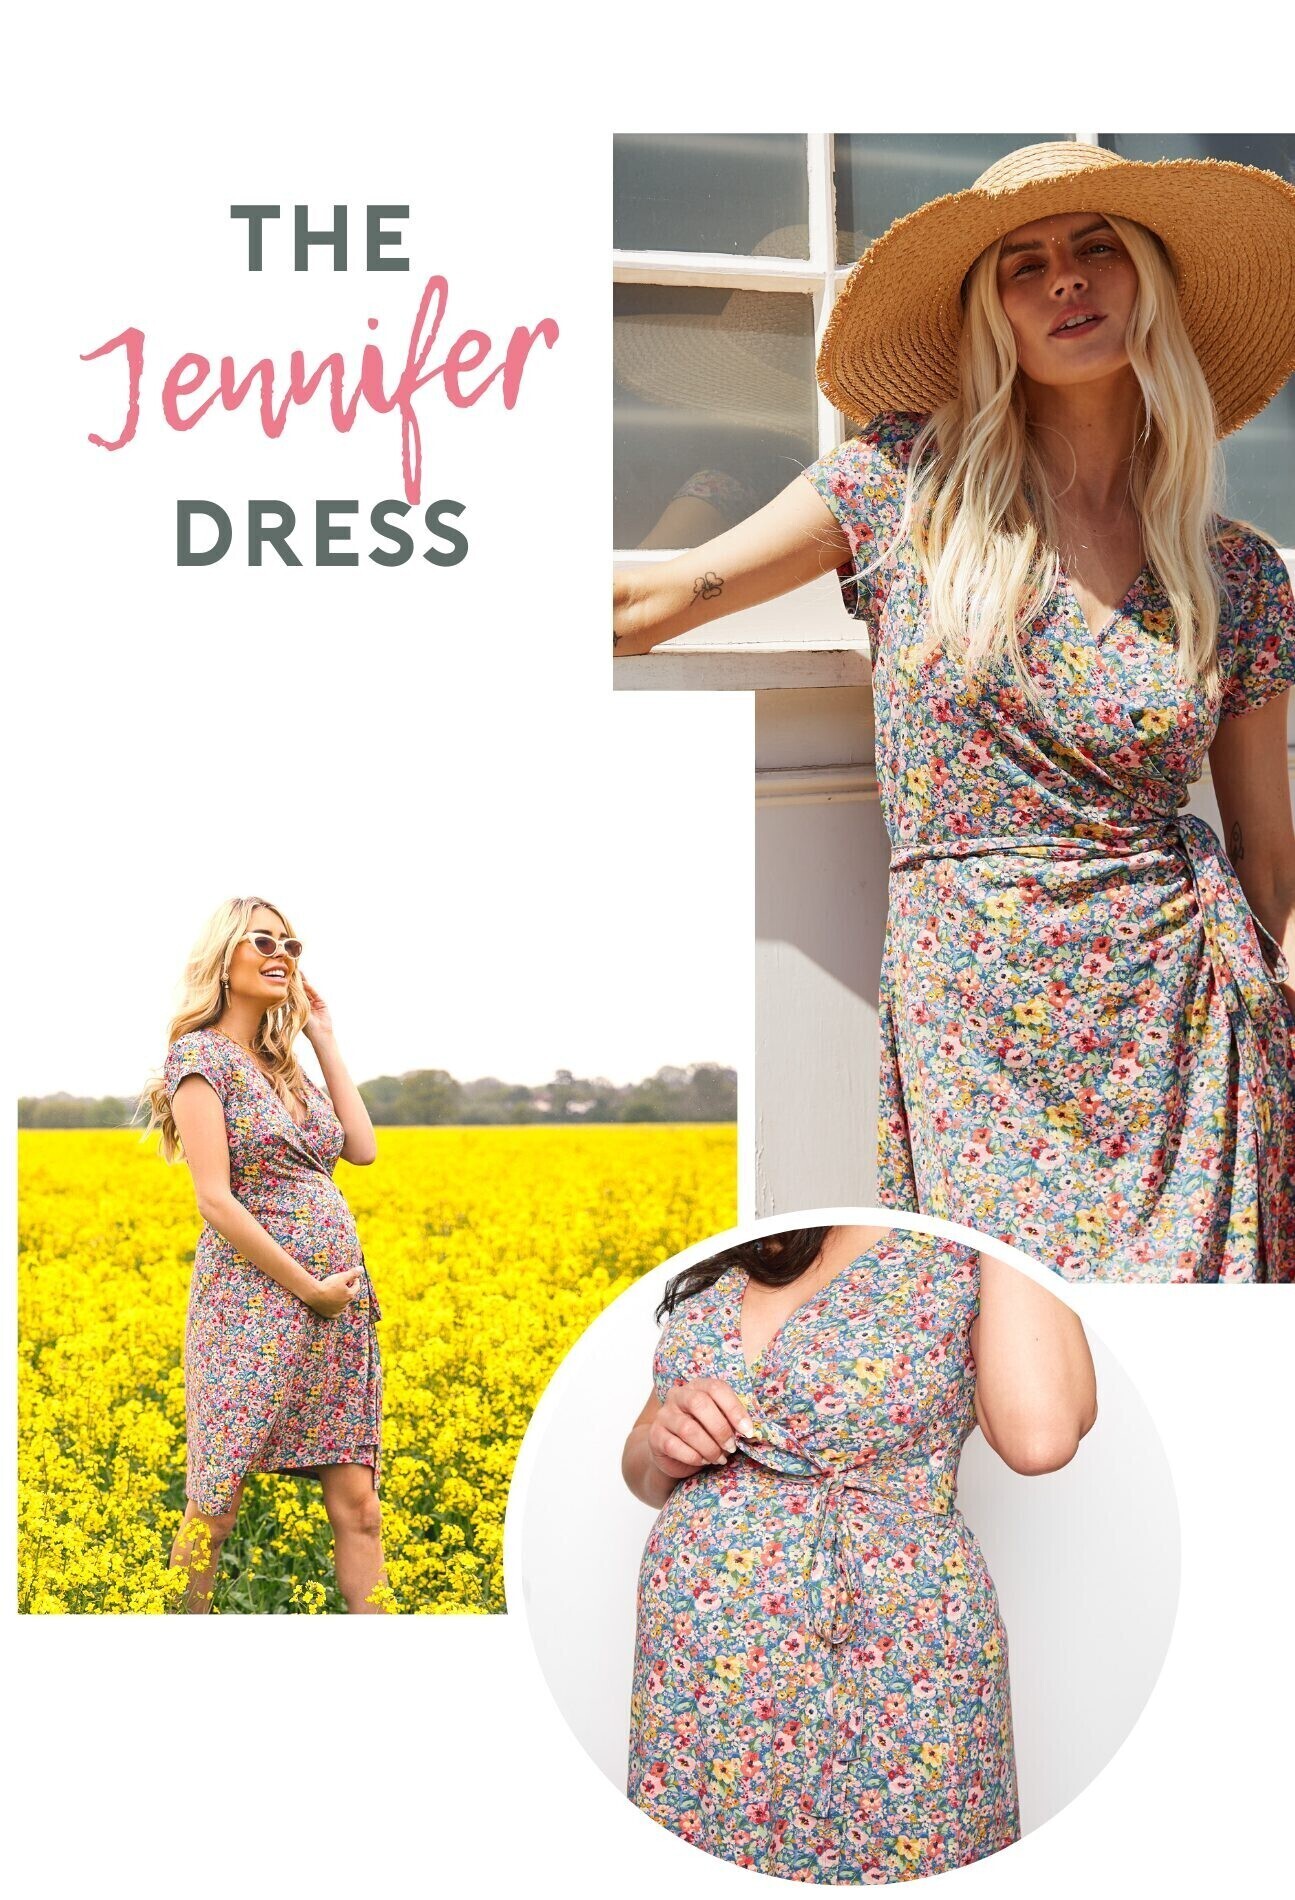 The Jennifer Dress collage